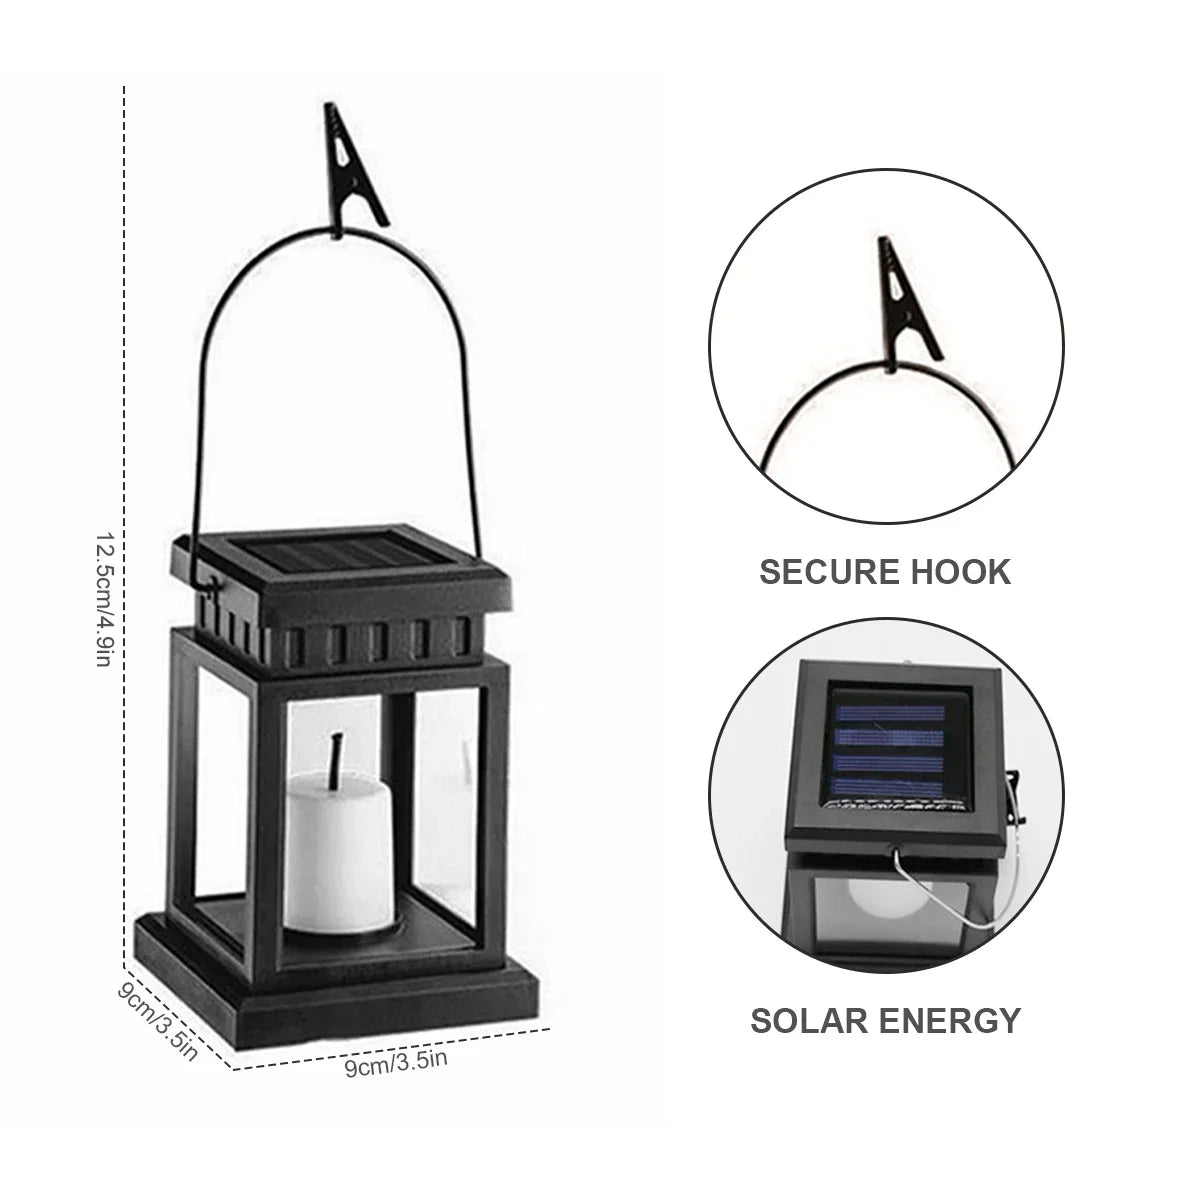 Solar Lights Outdoor Retro Palace Lantern